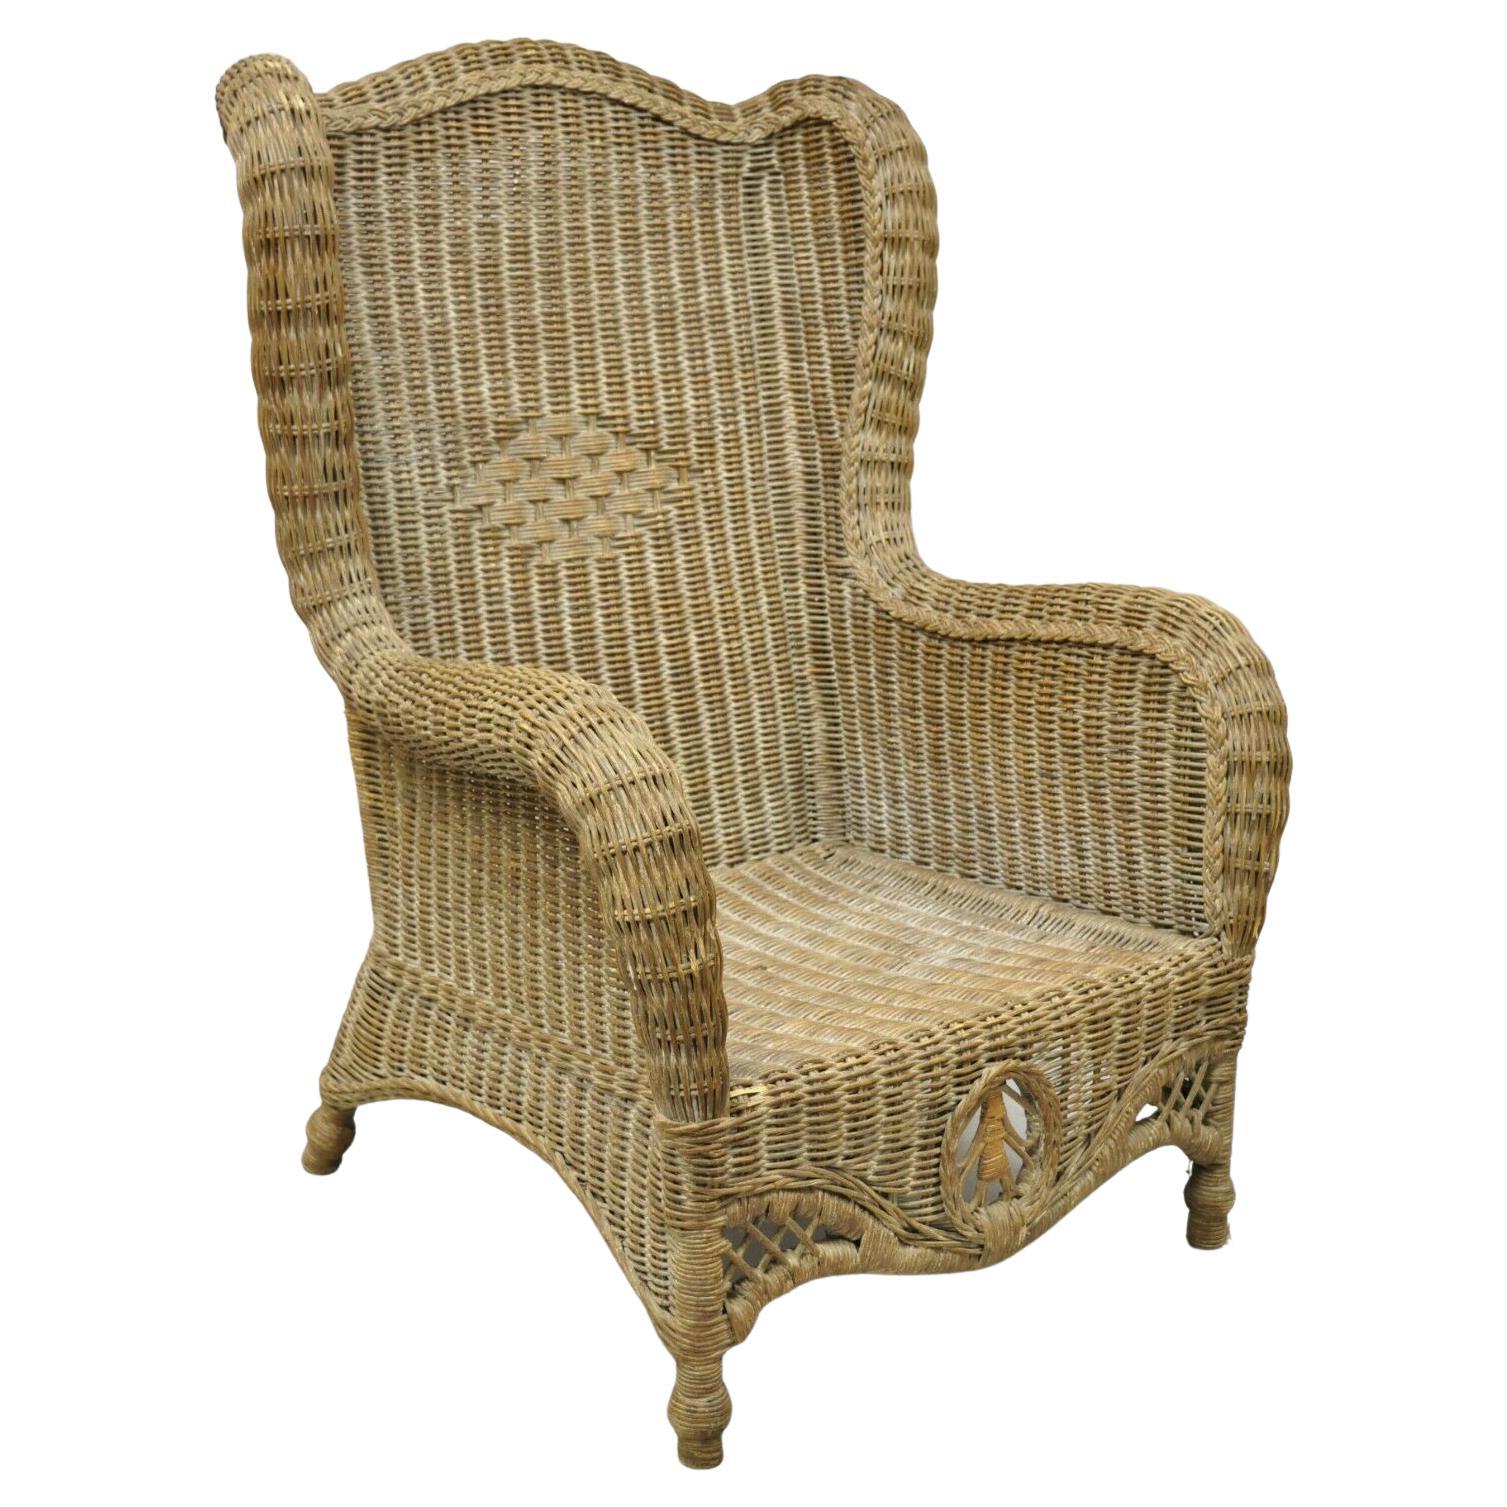 Große geflochtene Rattan Rattan viktorianischen Stil Wingback Lounge Sessel im Angebot